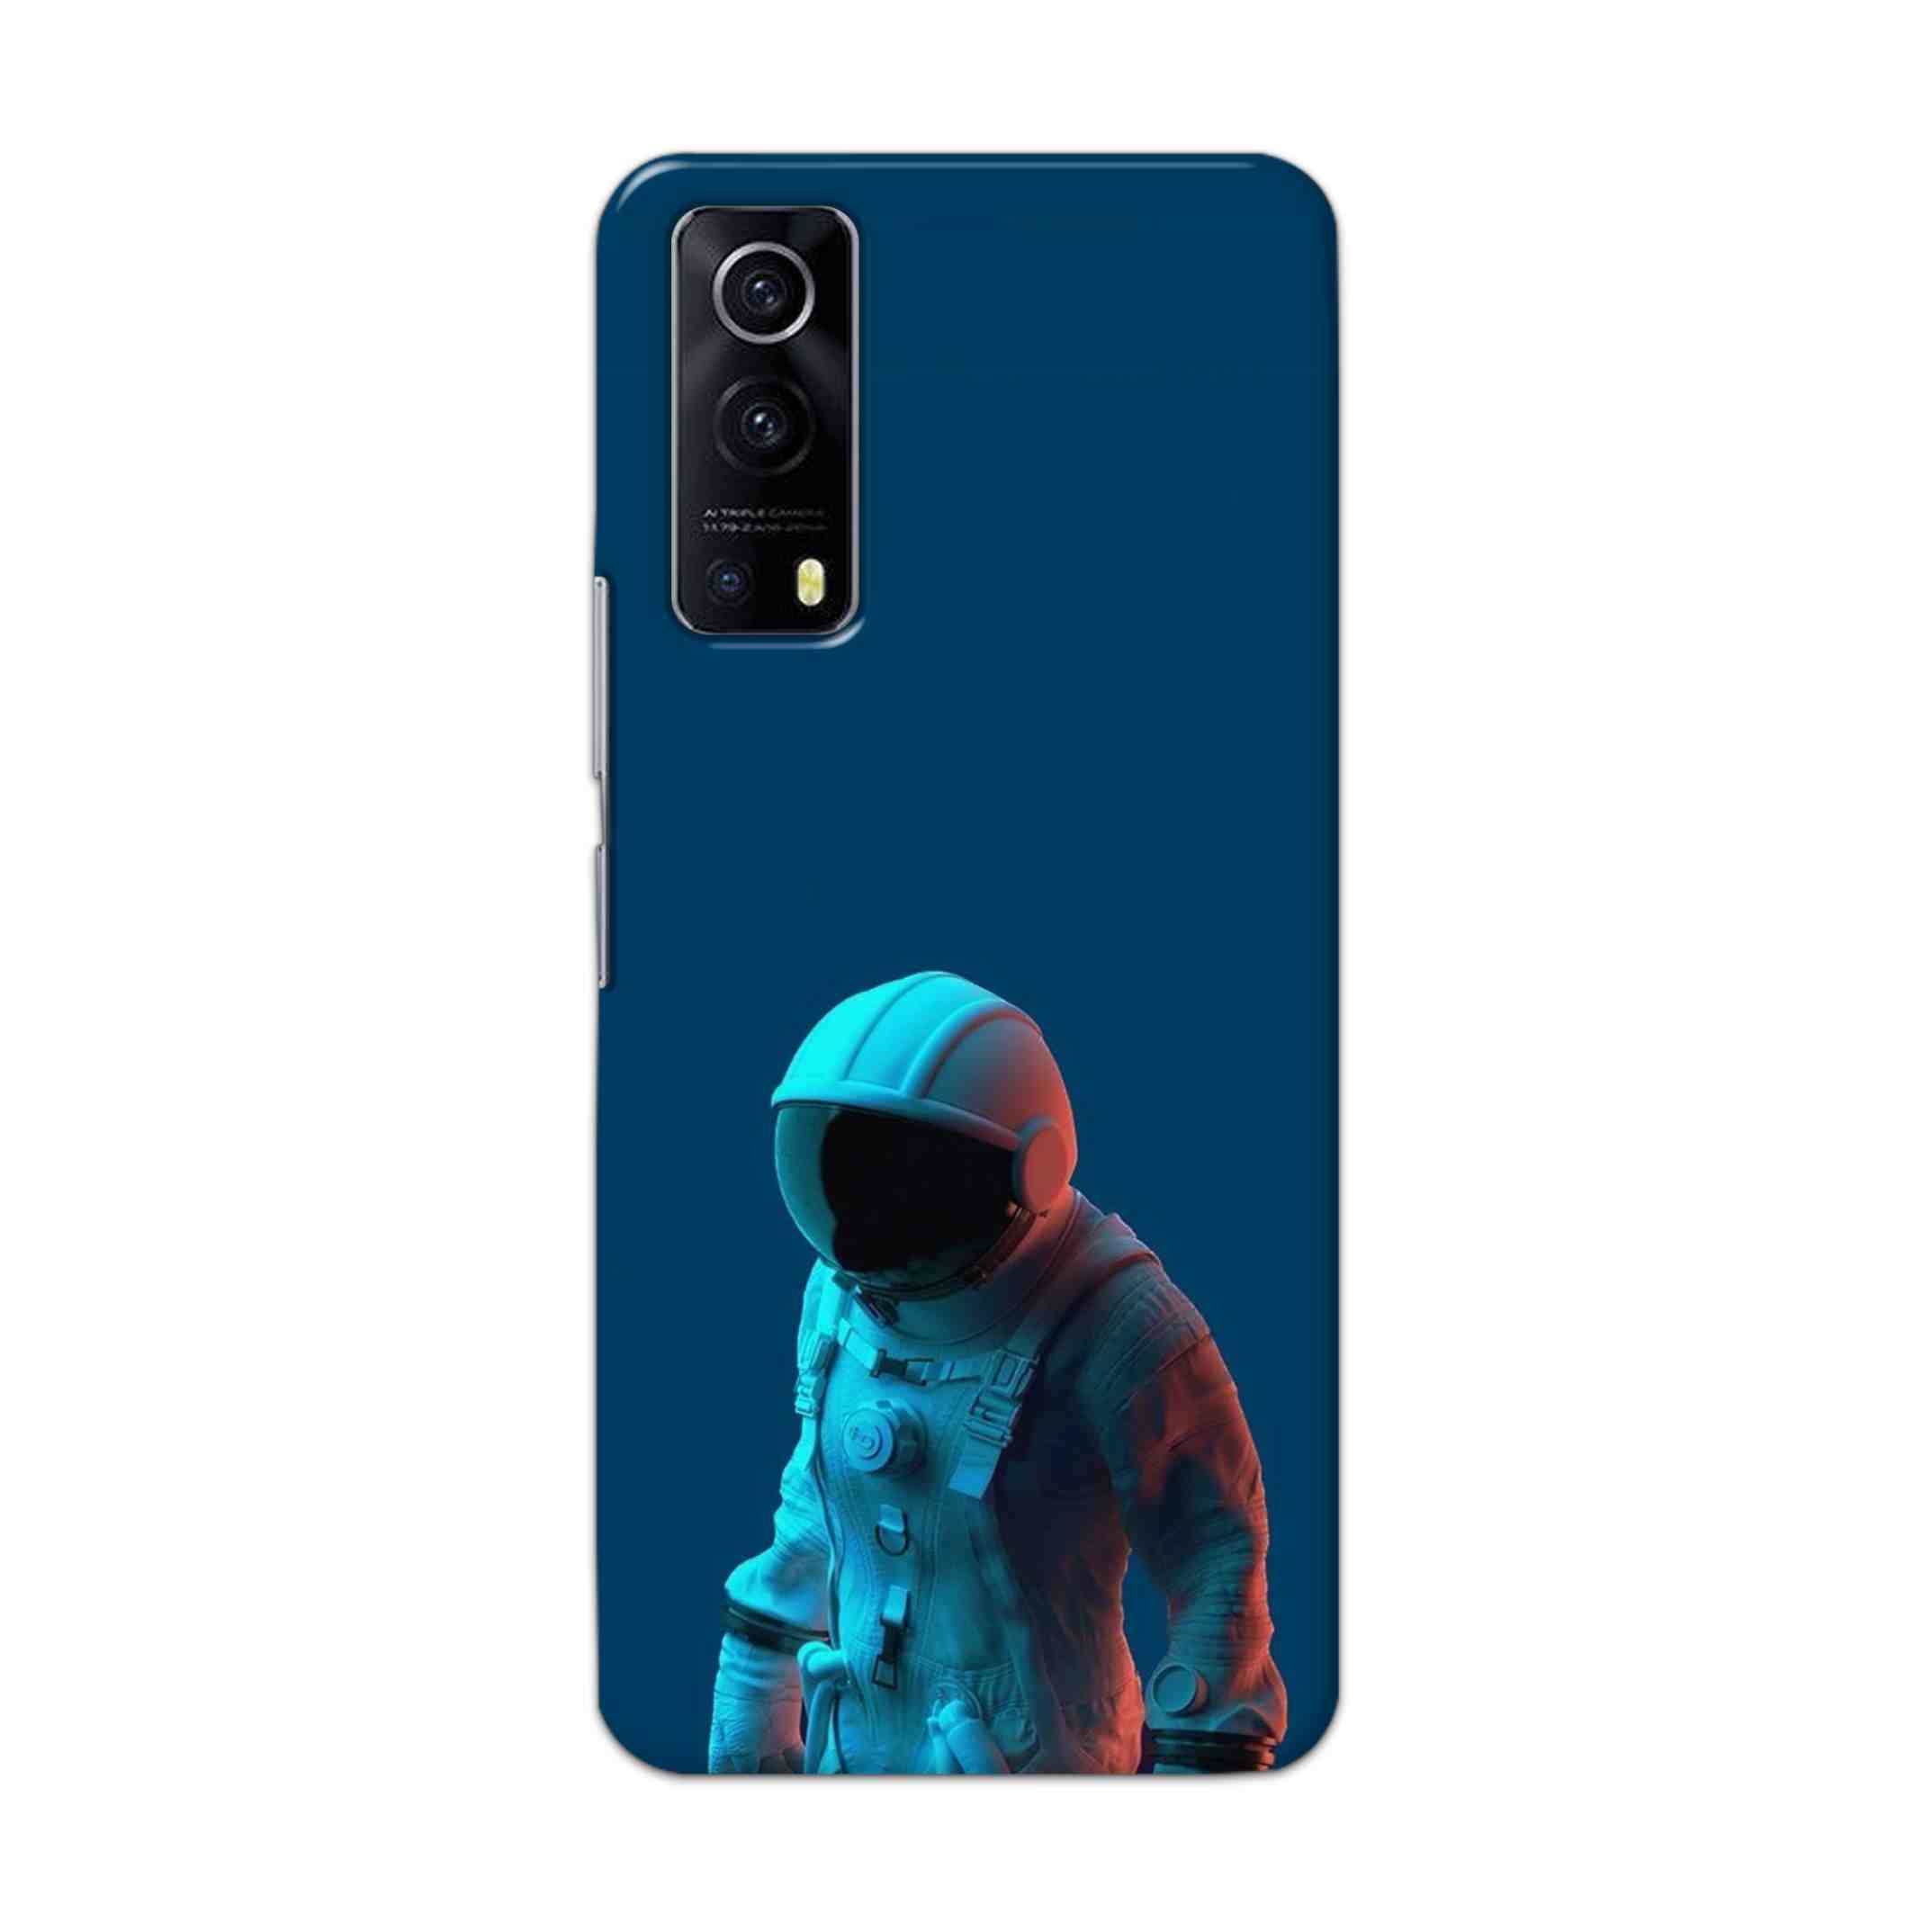 Buy Blue Astronaut Hard Back Mobile Phone Case Cover For Vivo IQOO Z3 Online